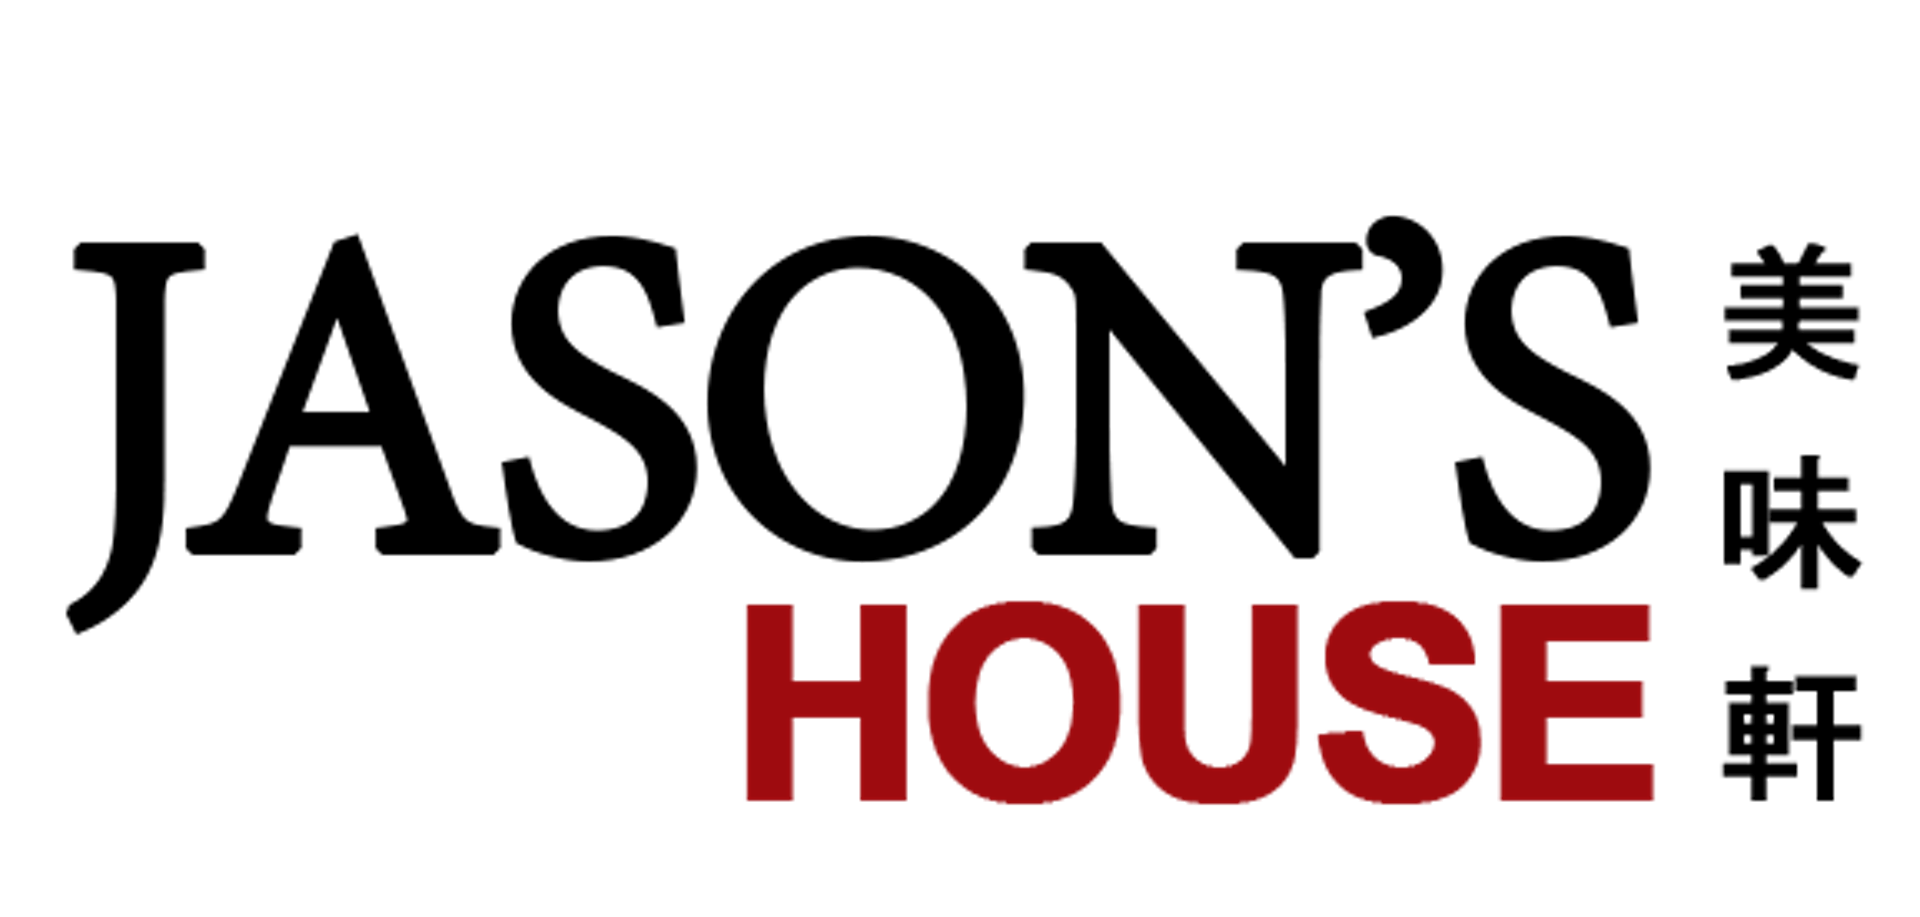 Jason S House Chinese Restaurant Simsbury Ct Menu Order Online